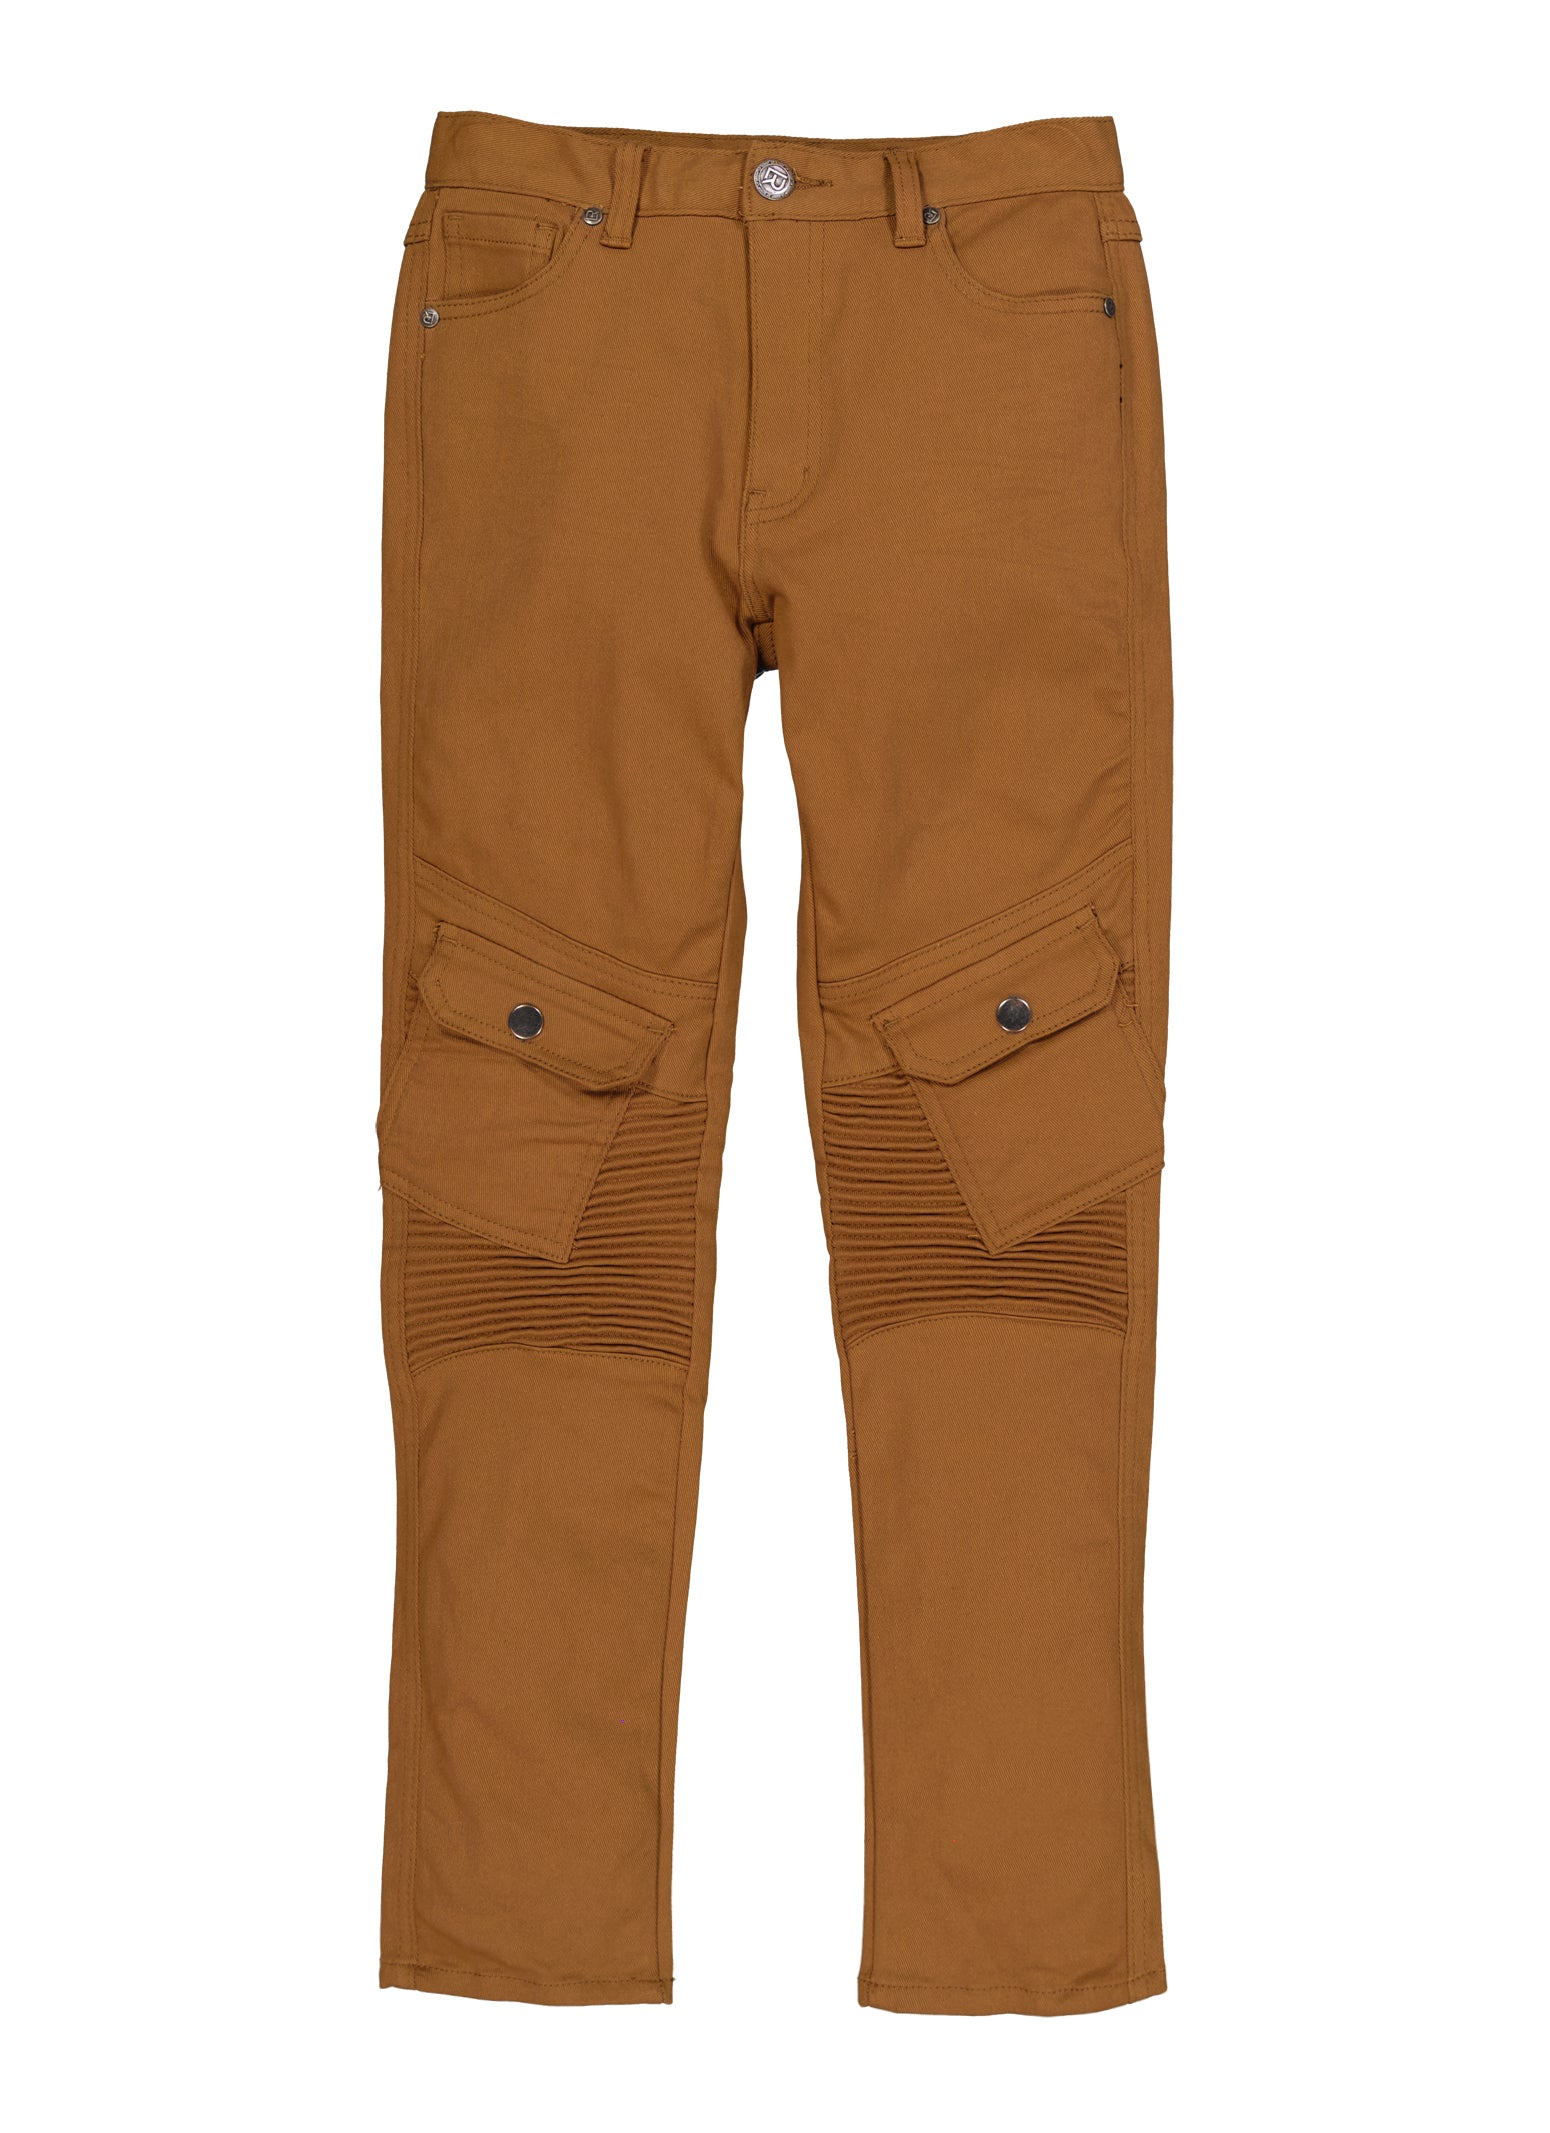 Boys Solid Cargo Pocket Moto Jeans, Khaki, Size 12